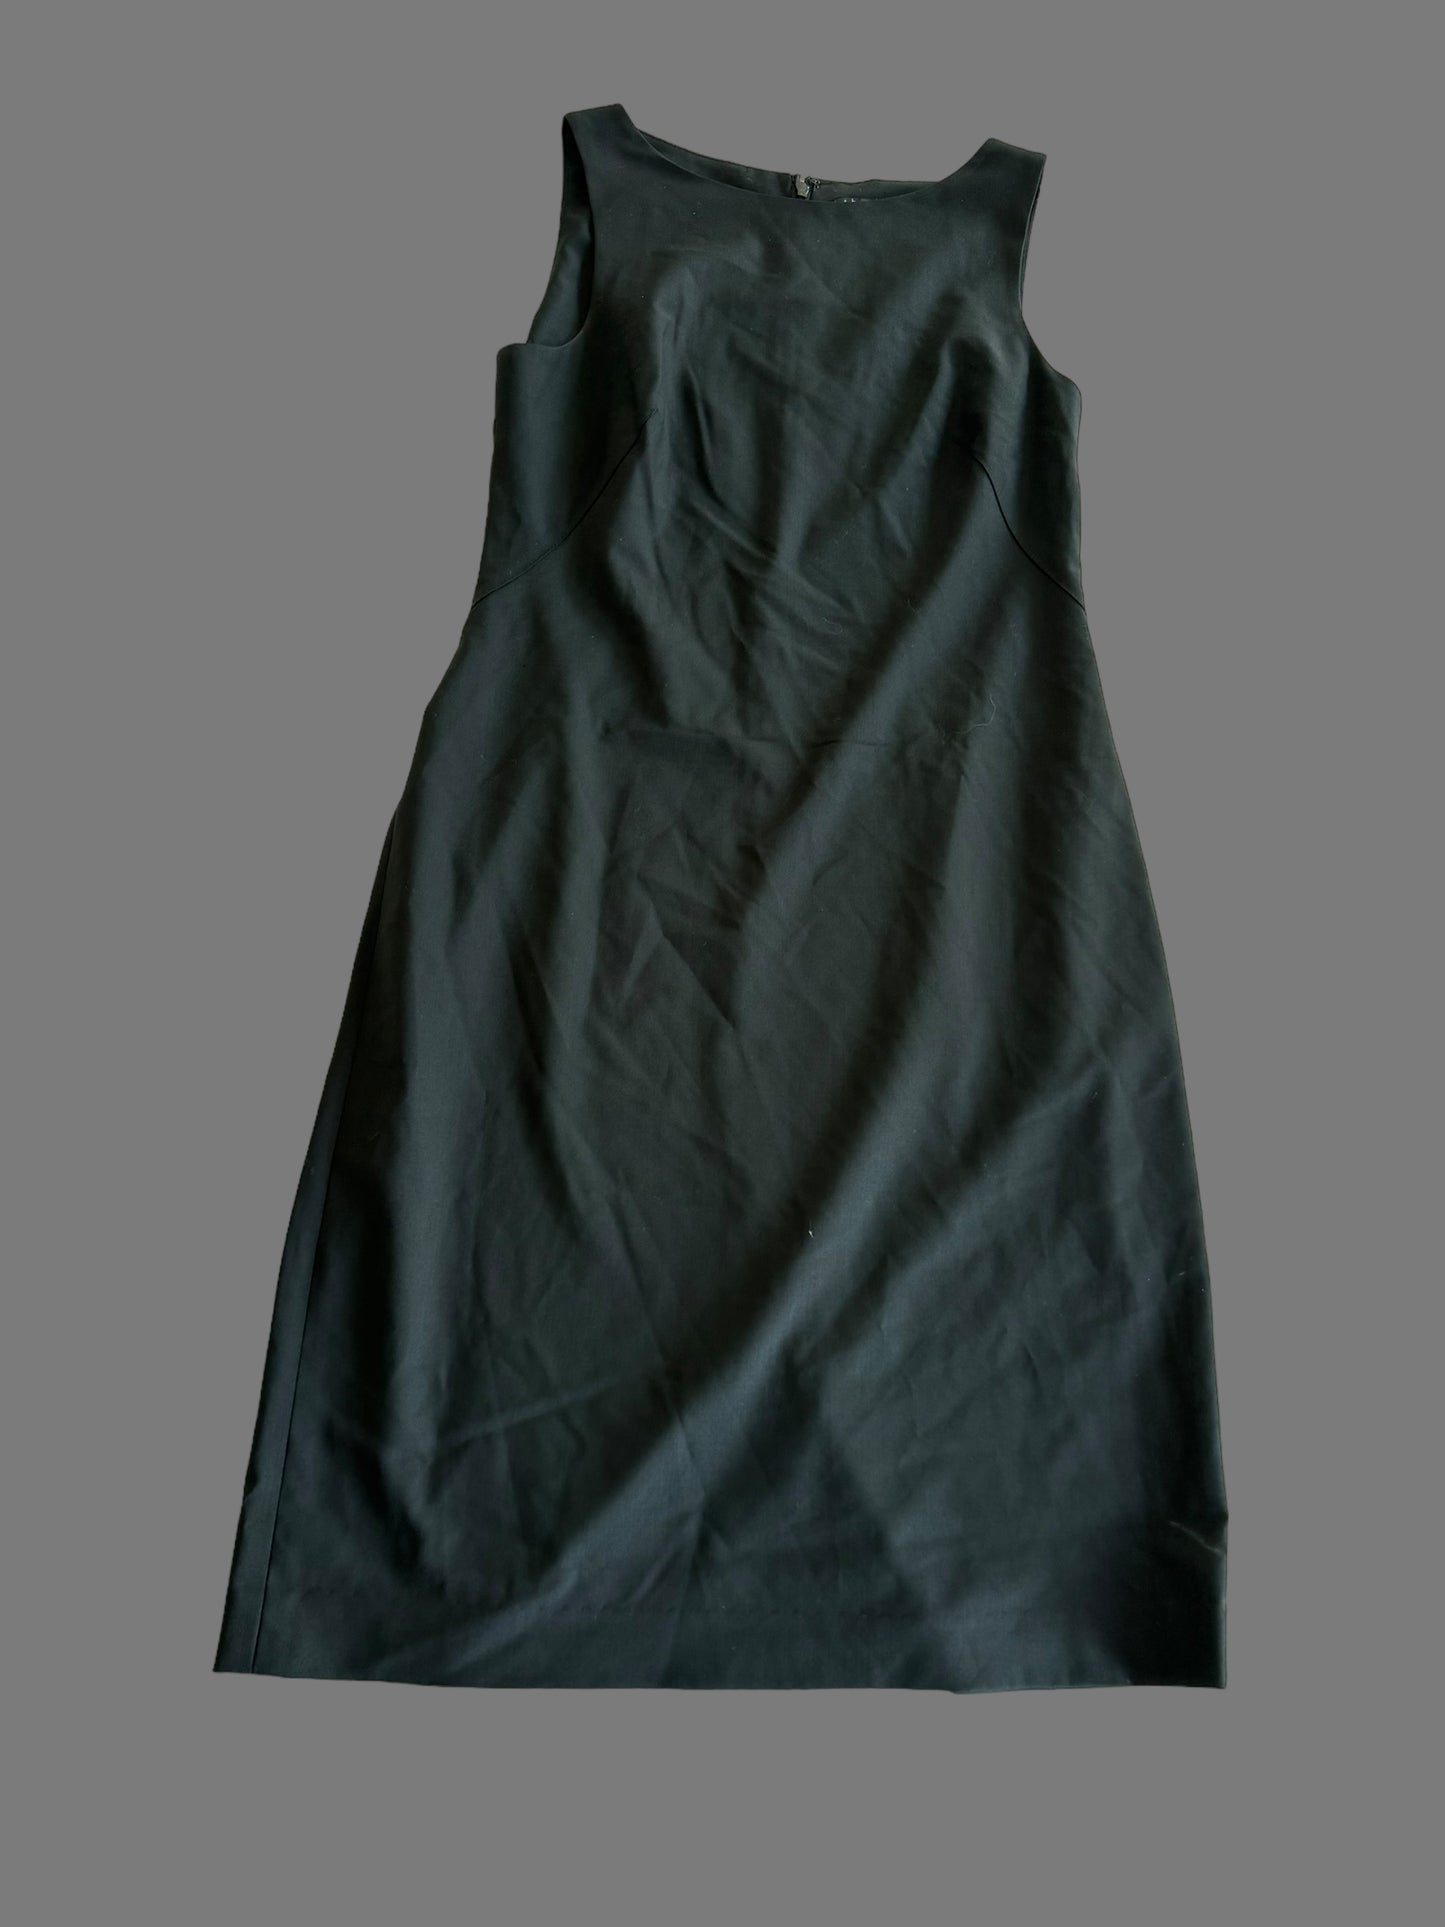 THEORY black dress size medium